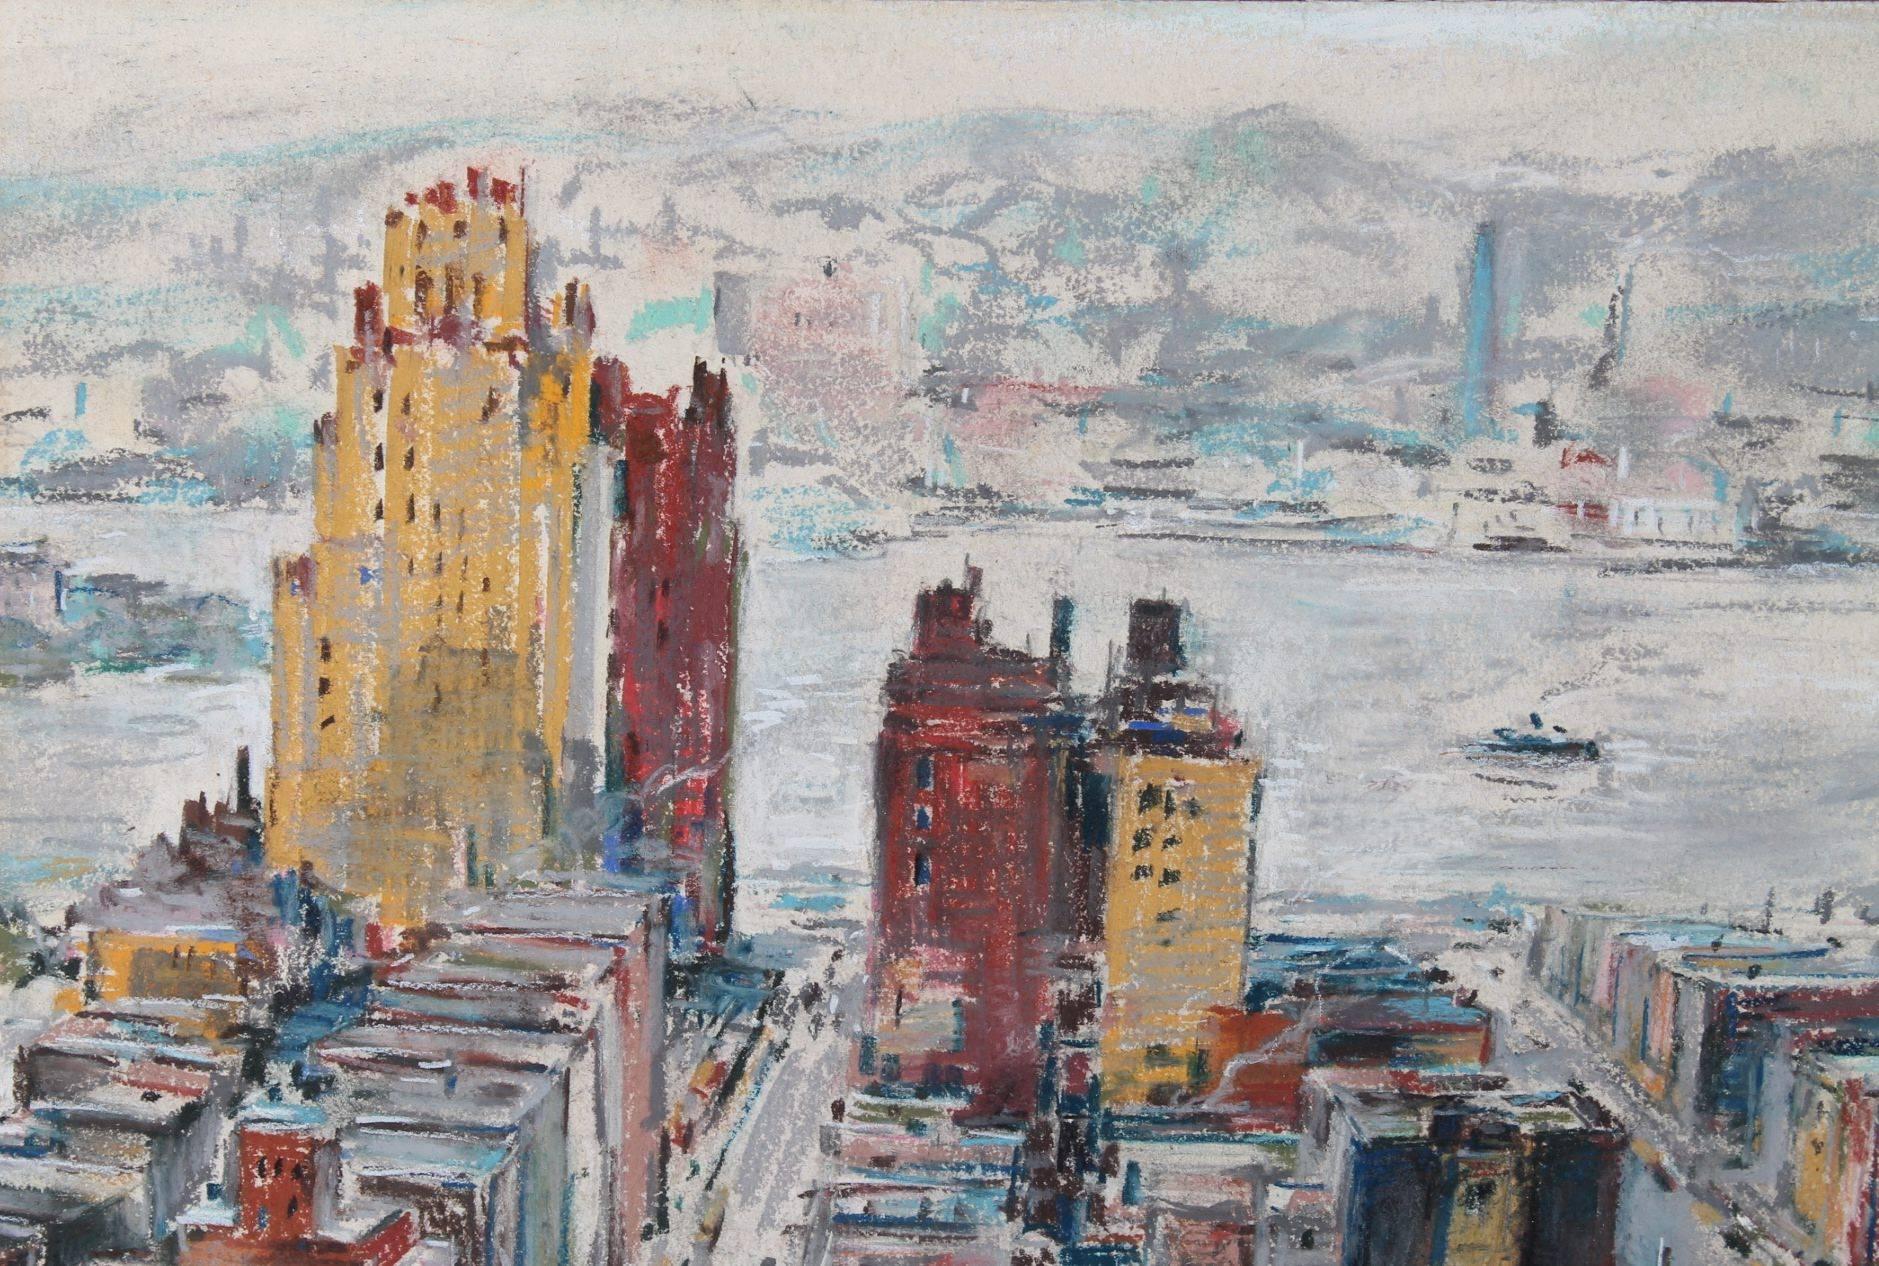 Hudson River from New York - Painting by Michael Zelenko